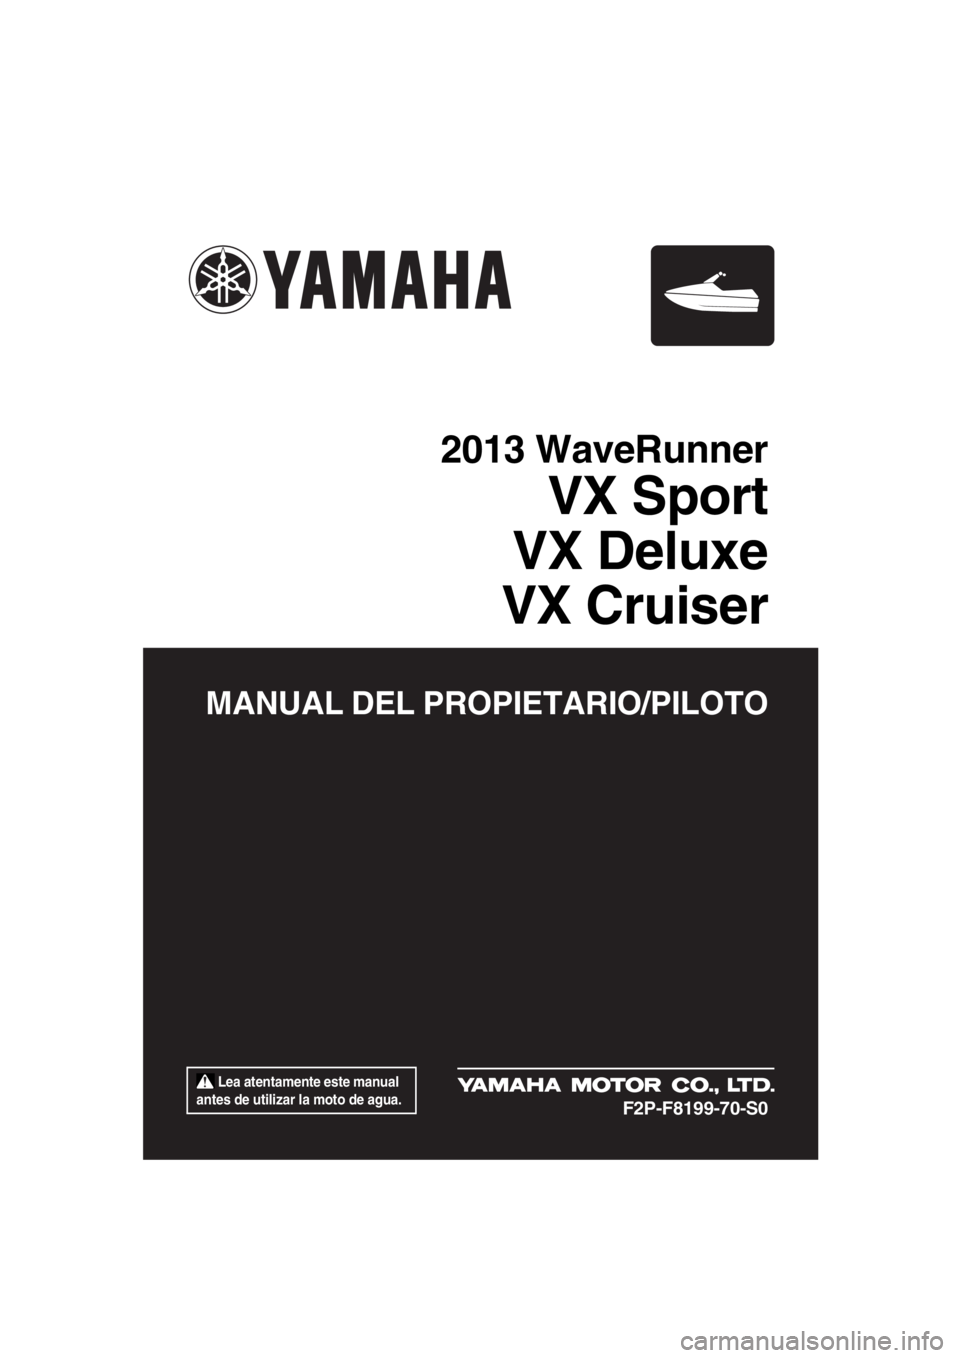 YAMAHA VX 2013  Manuale de Empleo (in Spanish)  Lea atentamente este manual 
antes de utilizar la moto de agua.
MANUAL DEL PROPIETARIO/PILOTO
2013 WaveRunner
VX Sport
VX Deluxe
VX Cruiser
F2P-F8199-70-S0
UF2P70S0.book  Page 1  Tuesday, July 24, 20